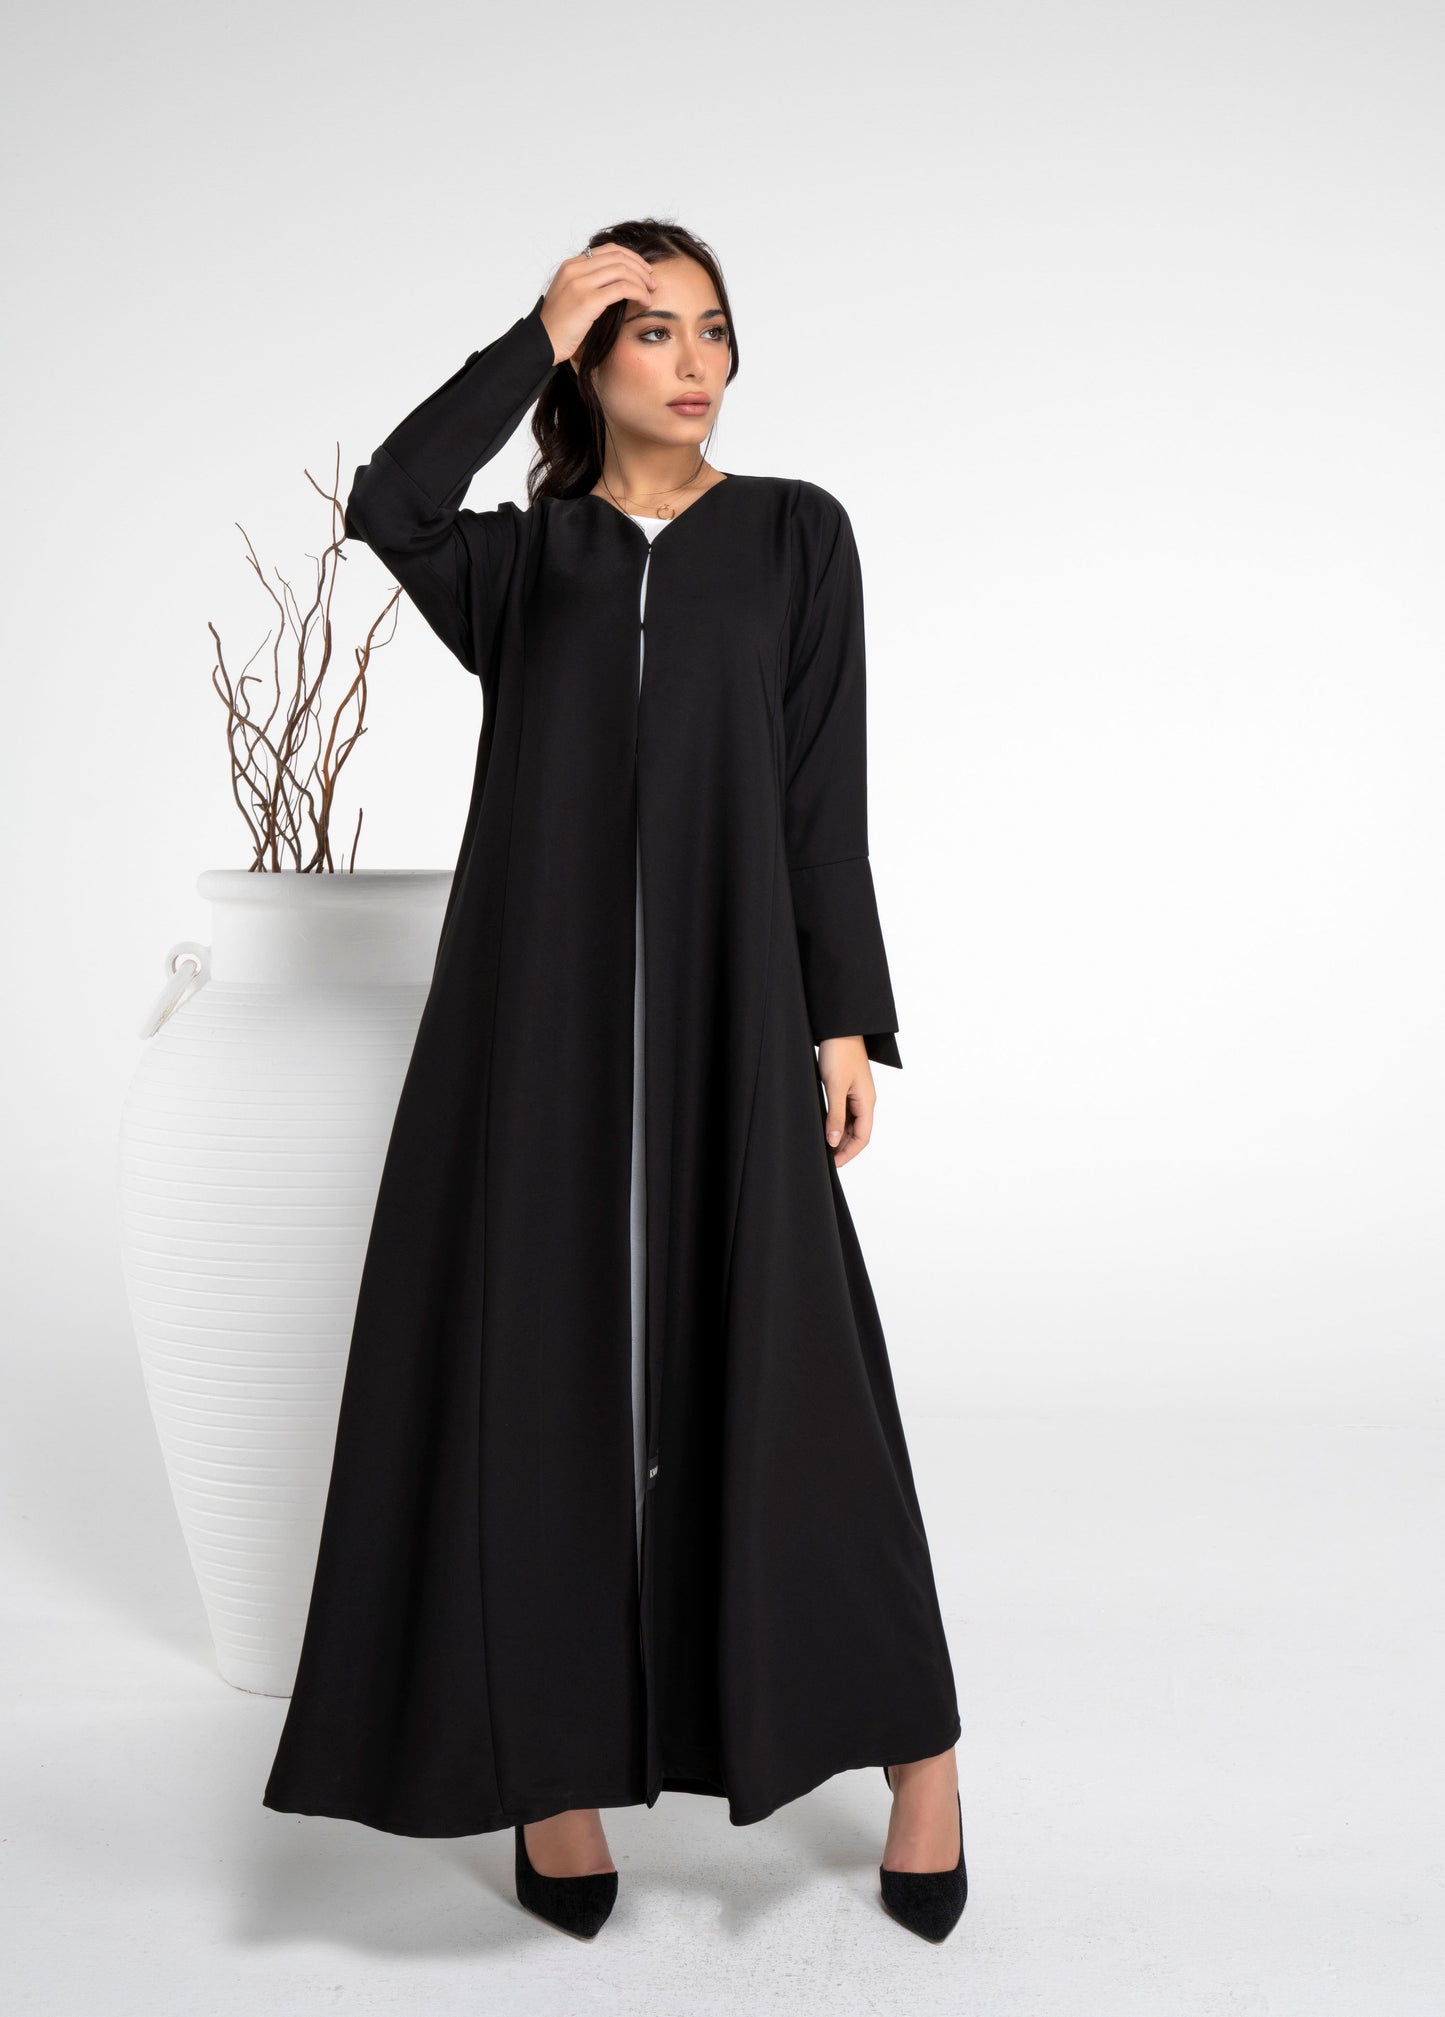 Formal black abaya with stylized sleeve pattern